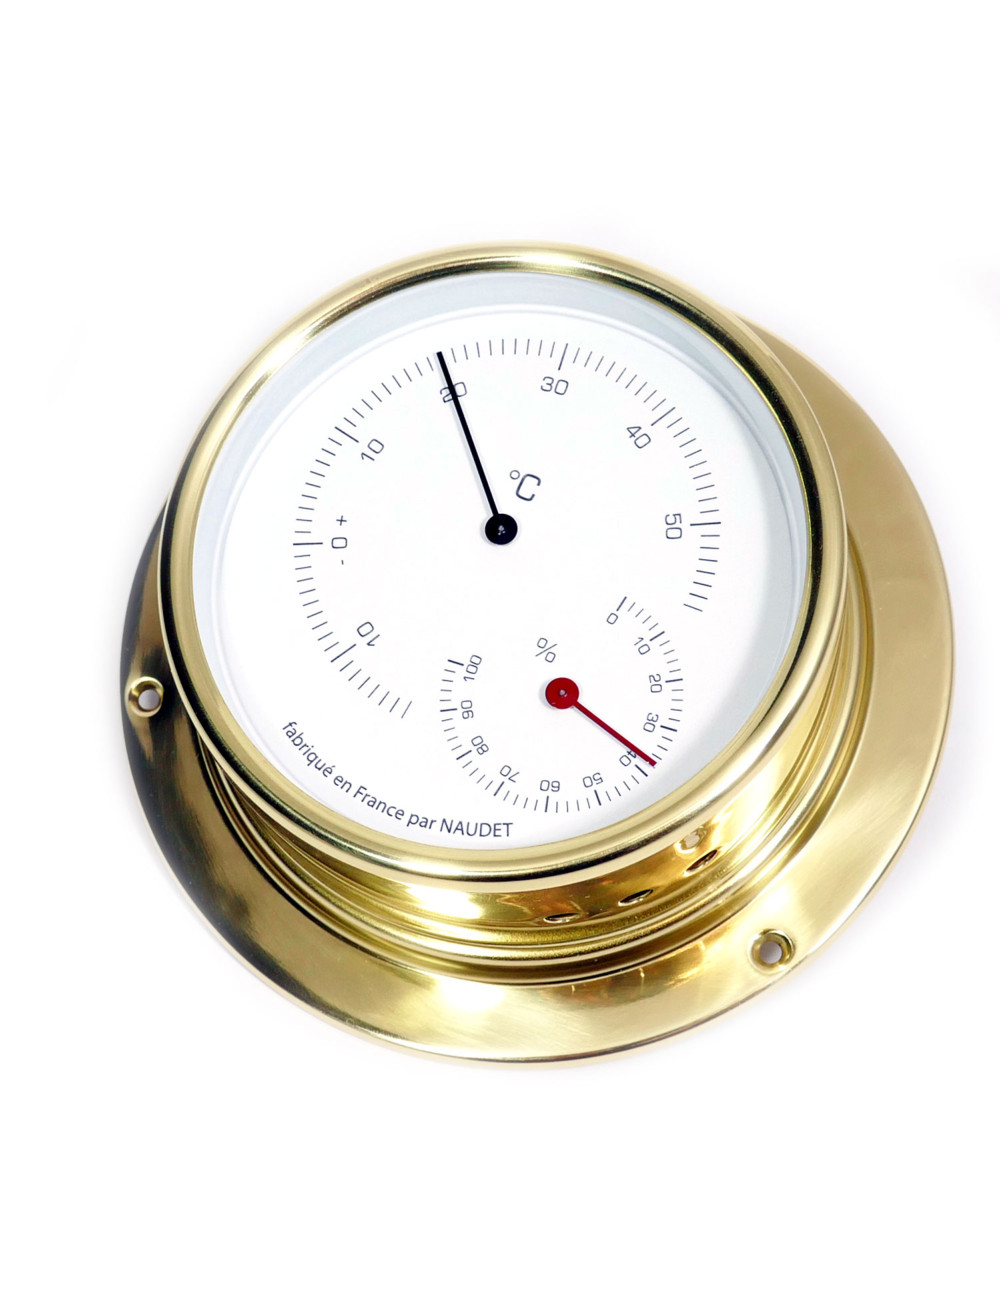 Thermomètre Hygromètre / Instrument de mesure 